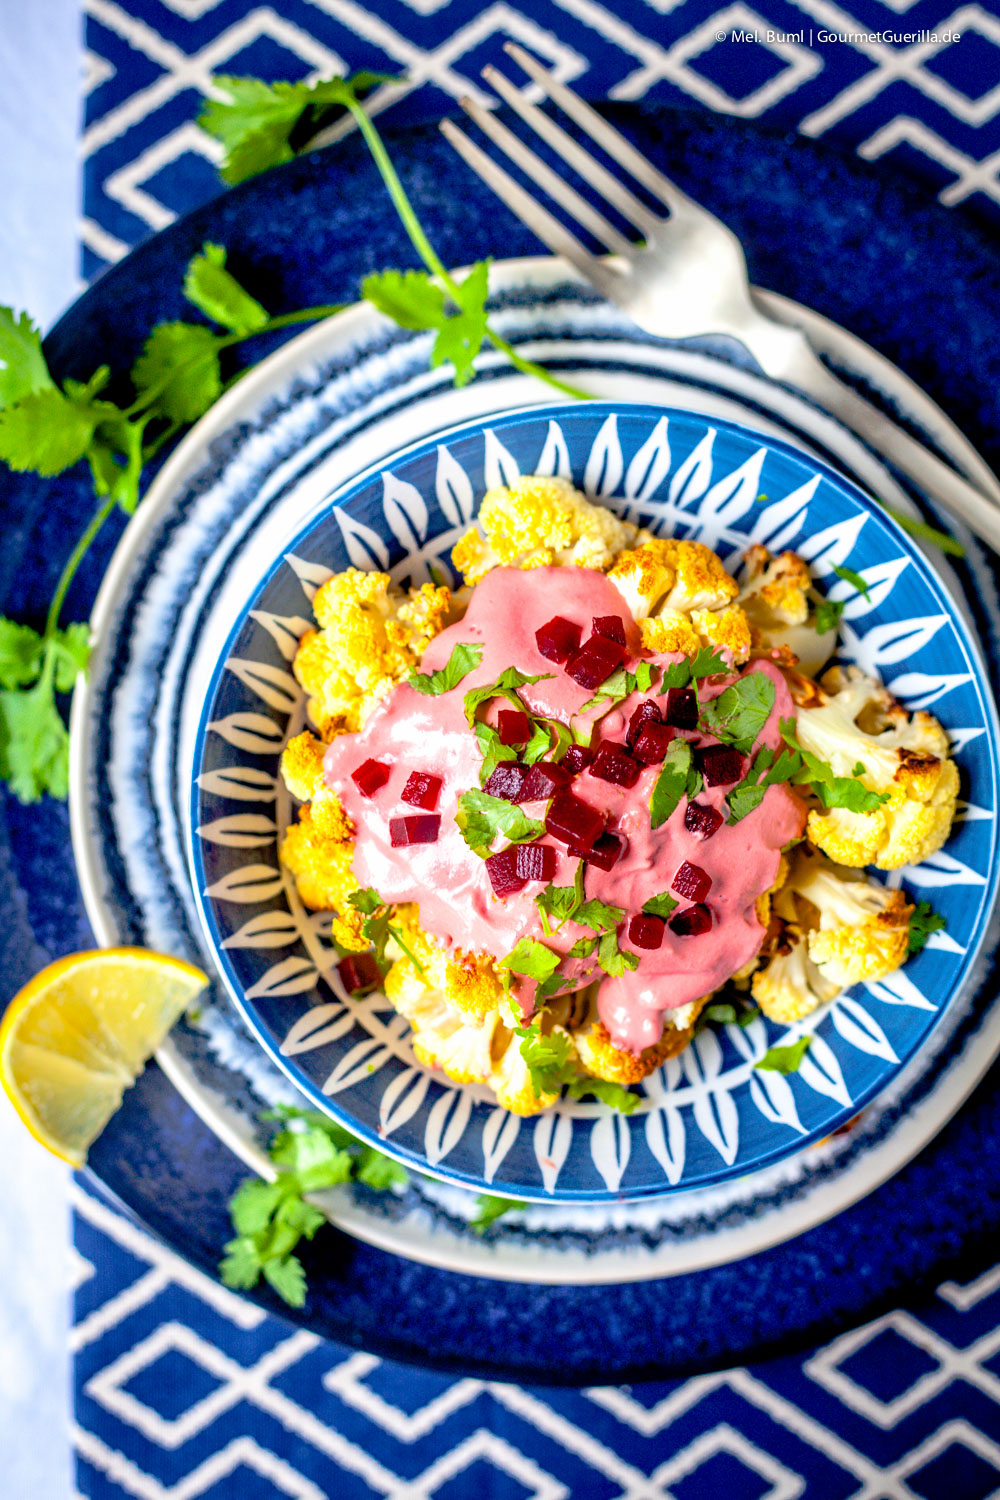 Oven-baked Cauliflower with Pretty Pink Tahina Sauce | GourmetGuerilla.com